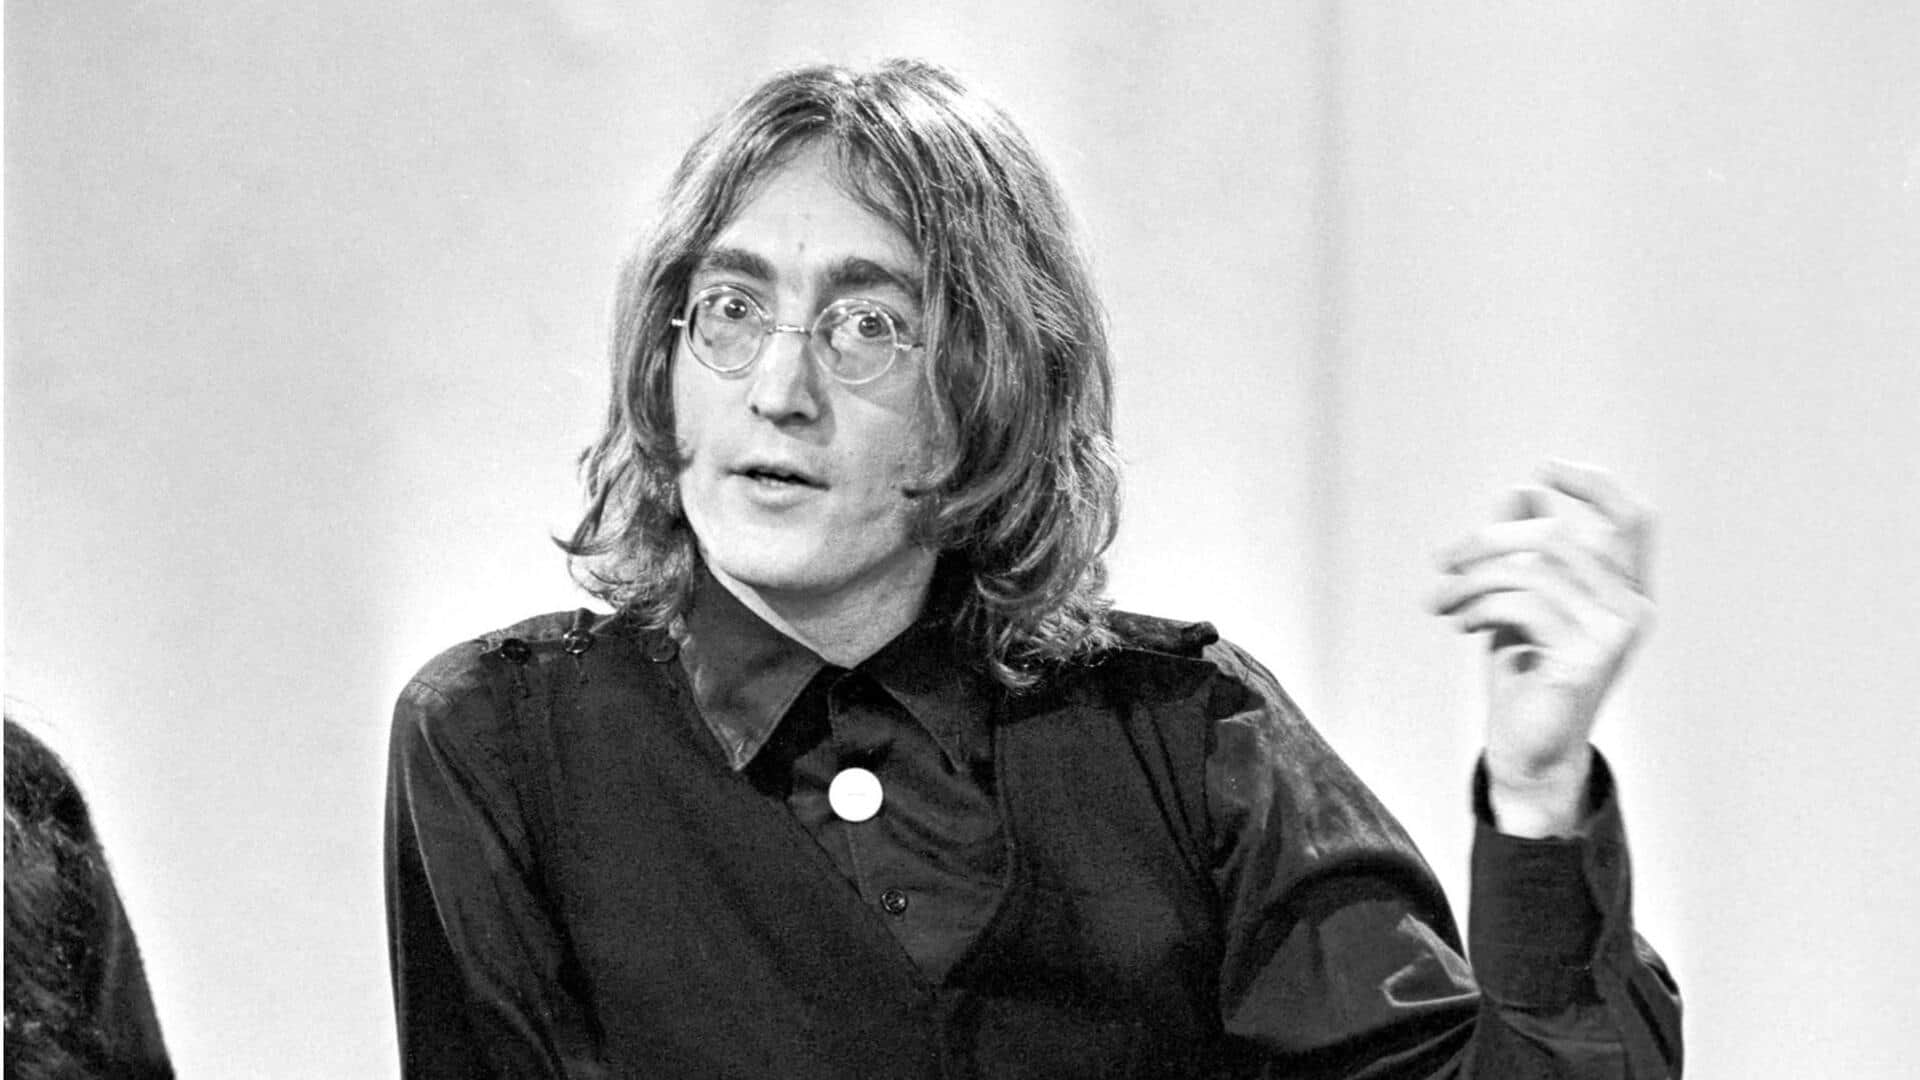 What were The Beatles's John Lennon's final words